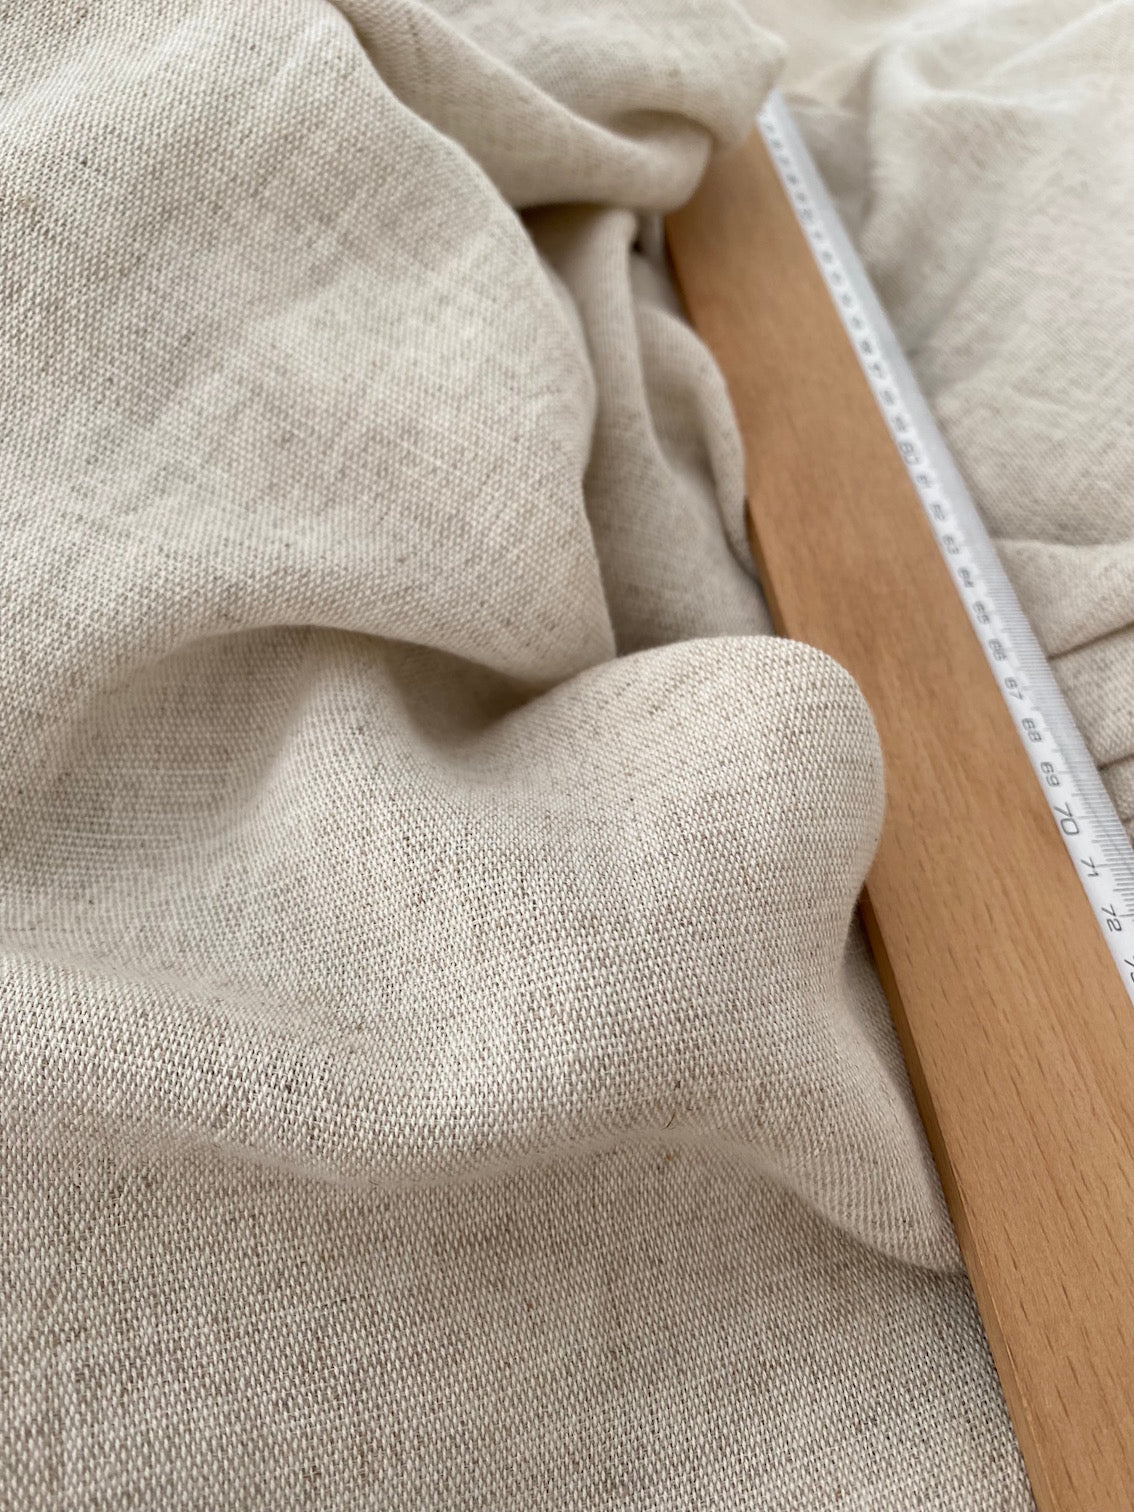 Tela de lino por metros - ropa de cama y prendas de vestir (ancho 285 cm) -  Maison Normande Home Decor